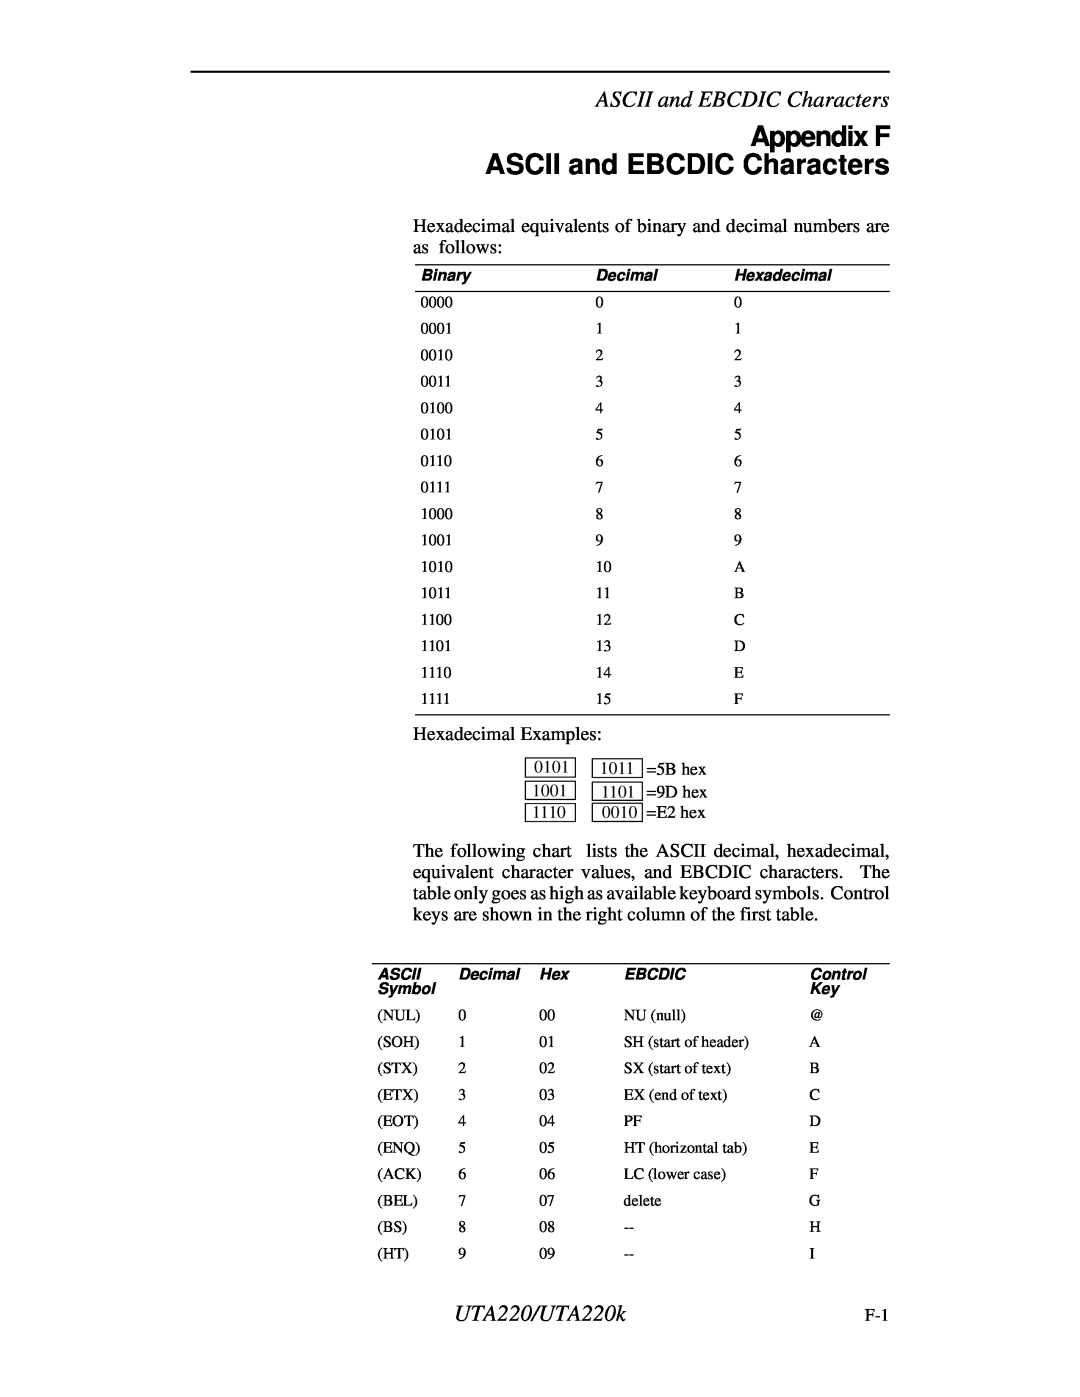 Northern UTA220/UTA220k manual Appendix F ASCII and EBCDIC Characters 